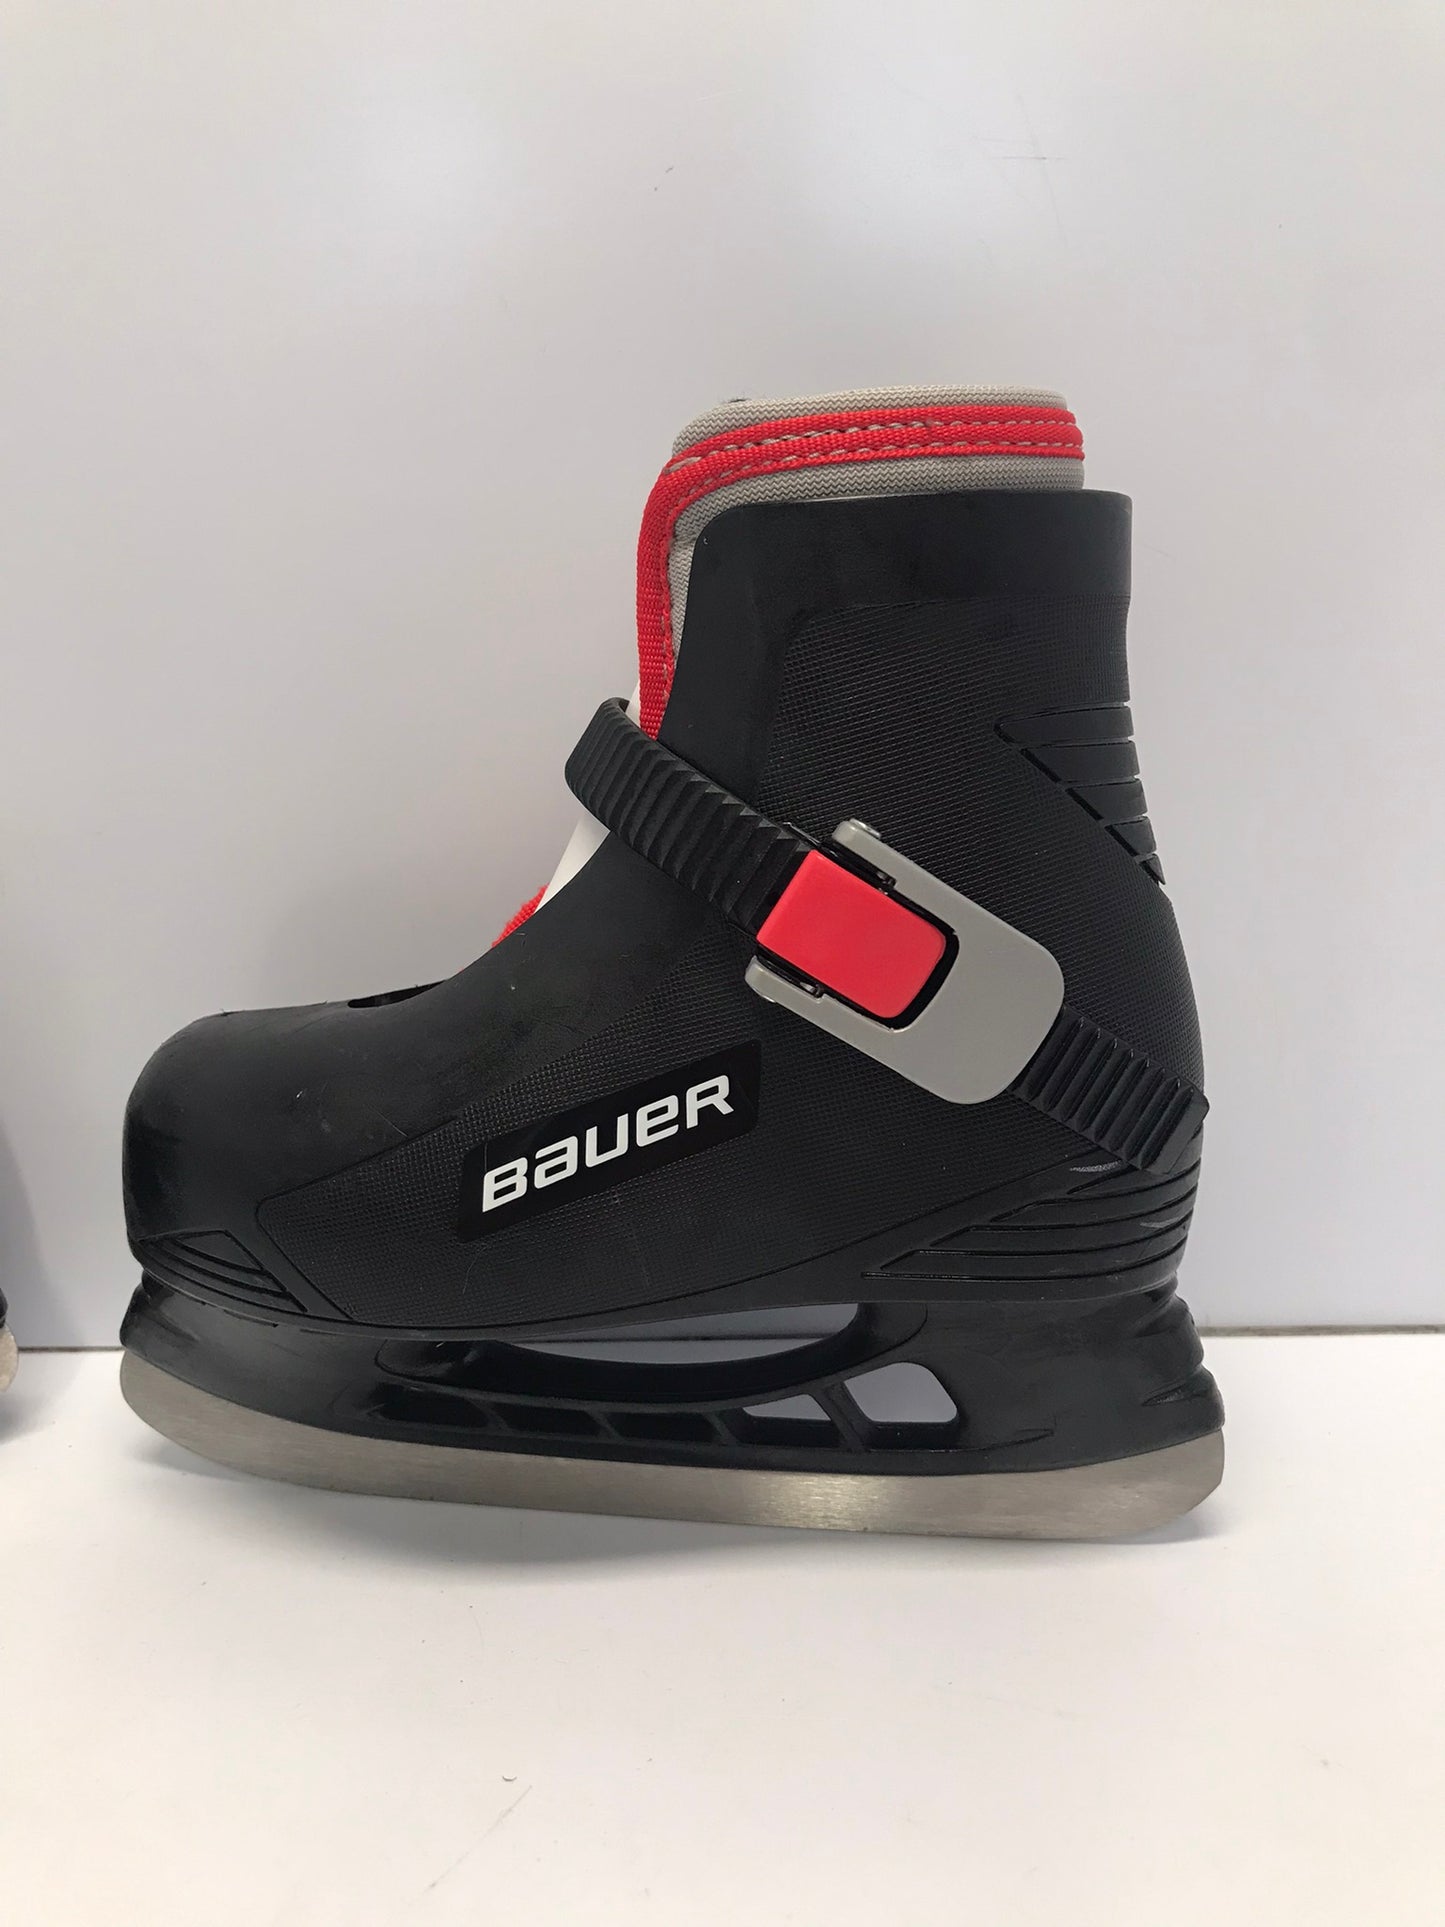 Ice Skates Child Size 8-9 Toddler Bauer Black Red Excellent